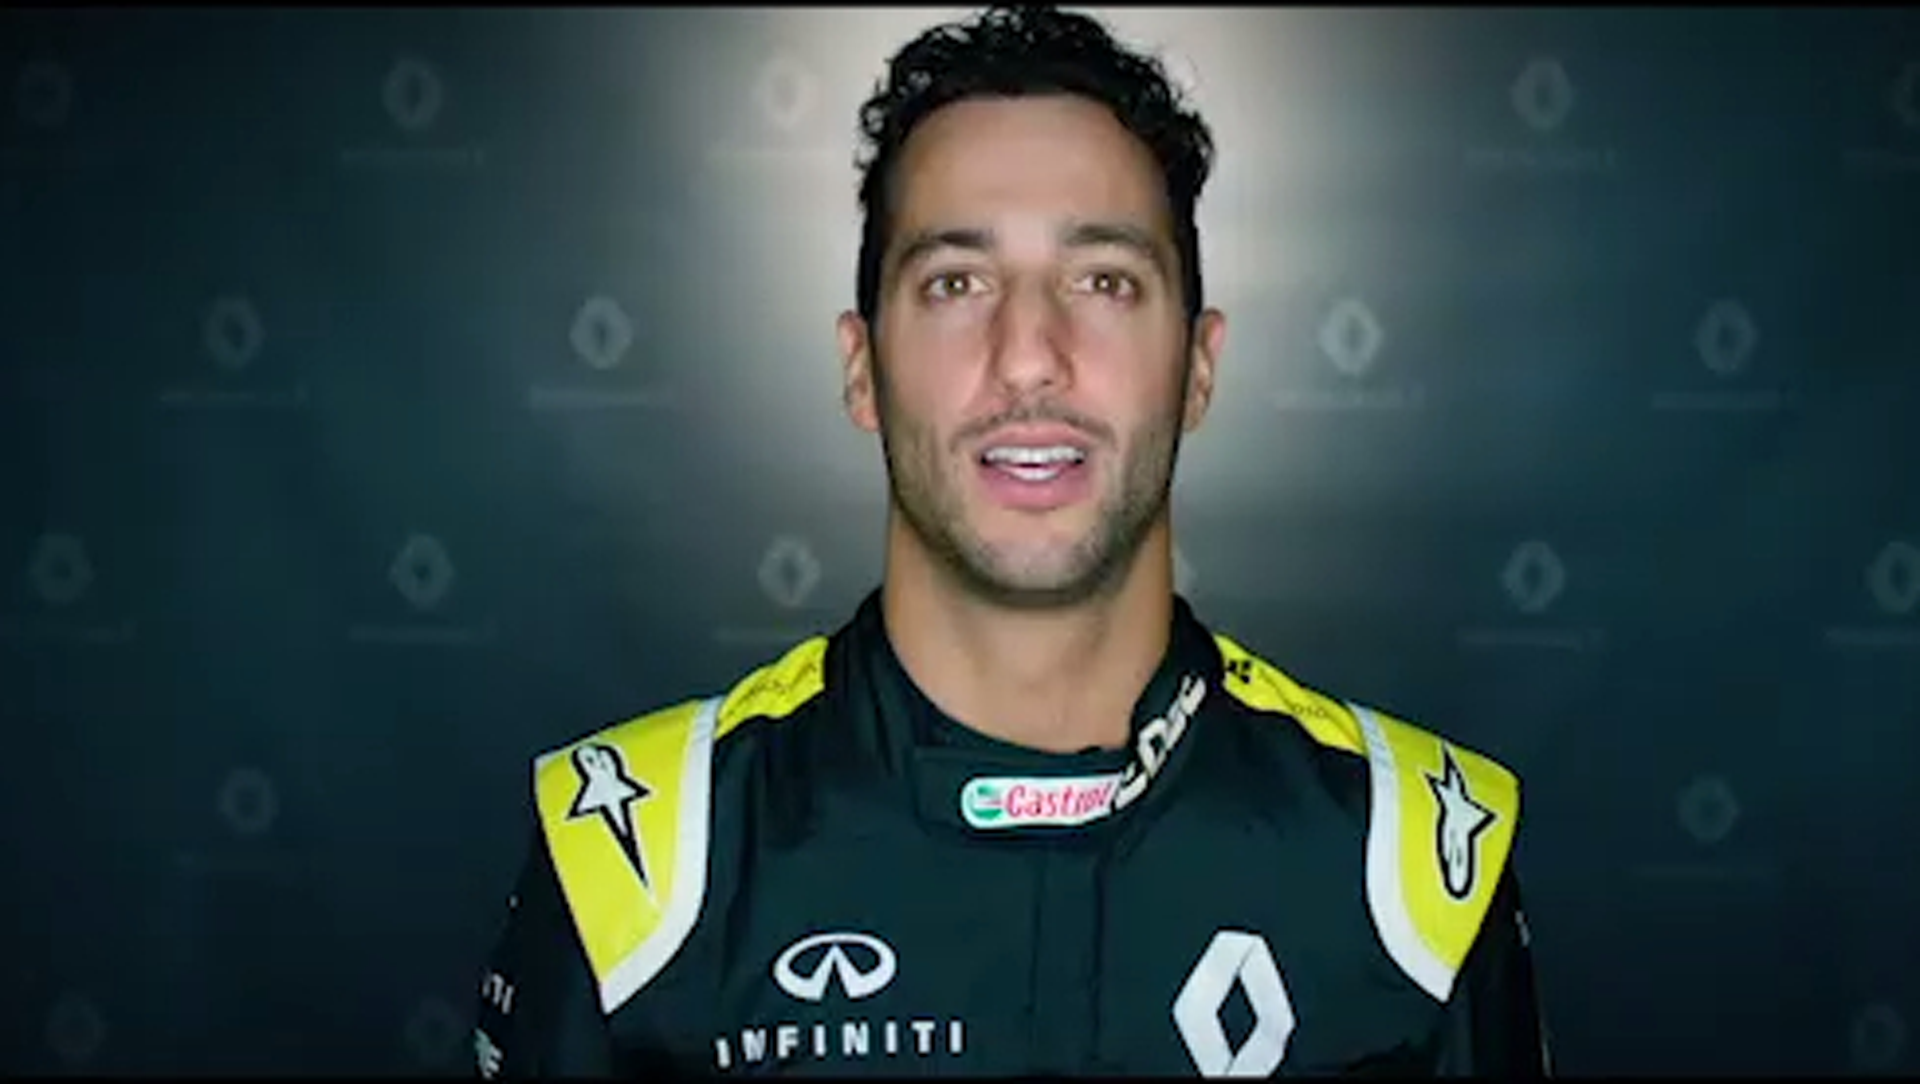 Daniel Ricciardo's biggest move yet